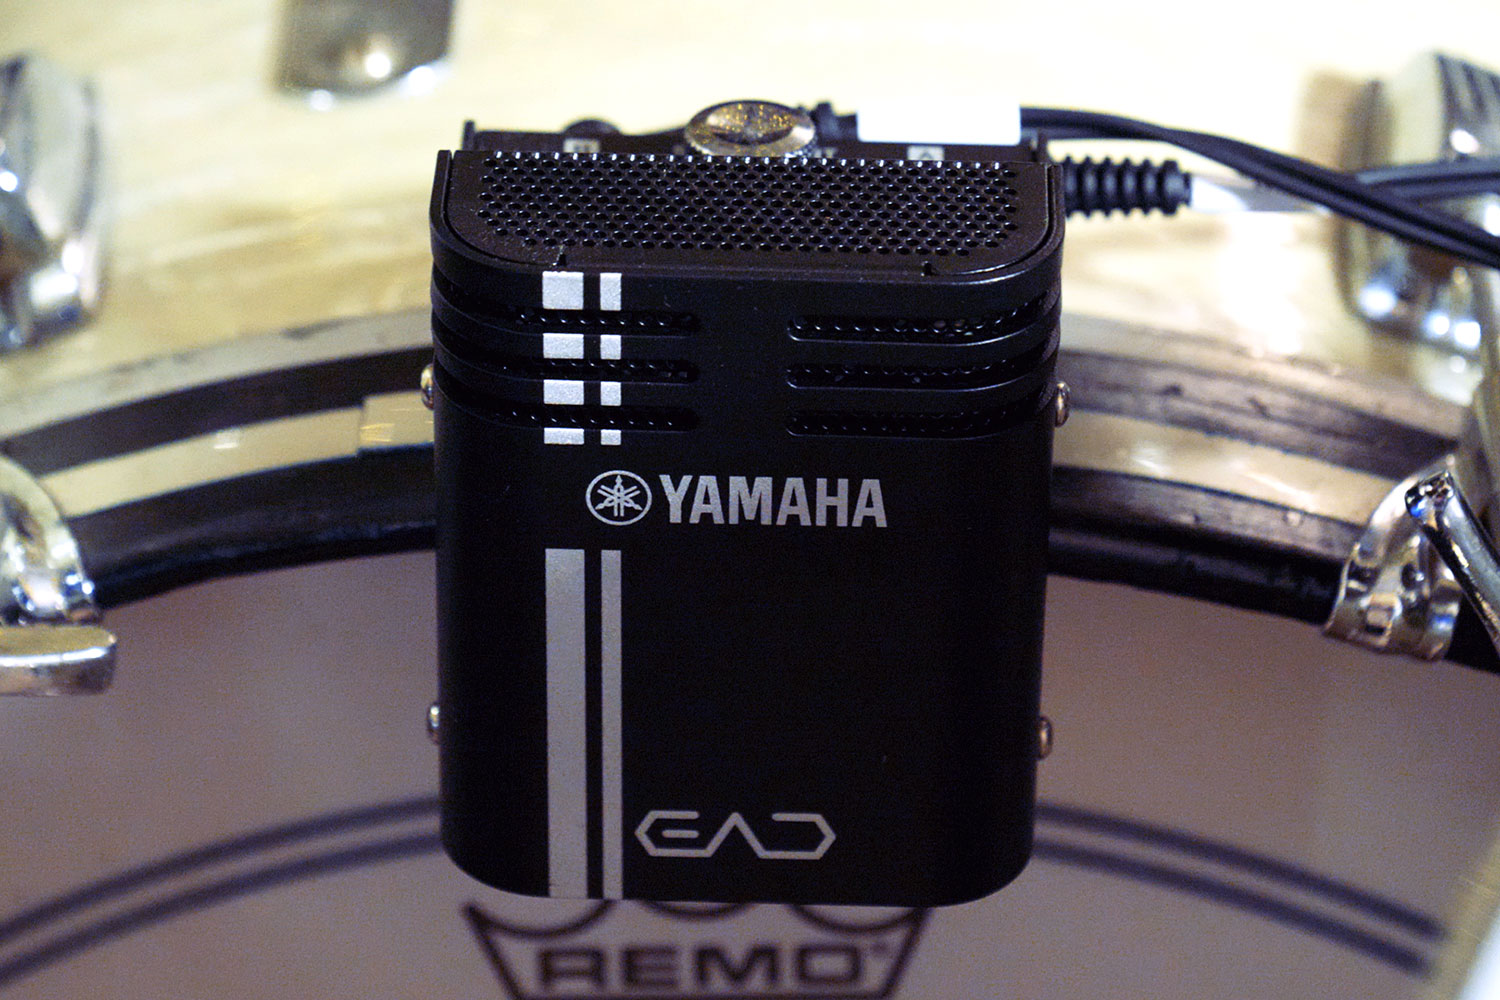 Yamaha EAD10 review